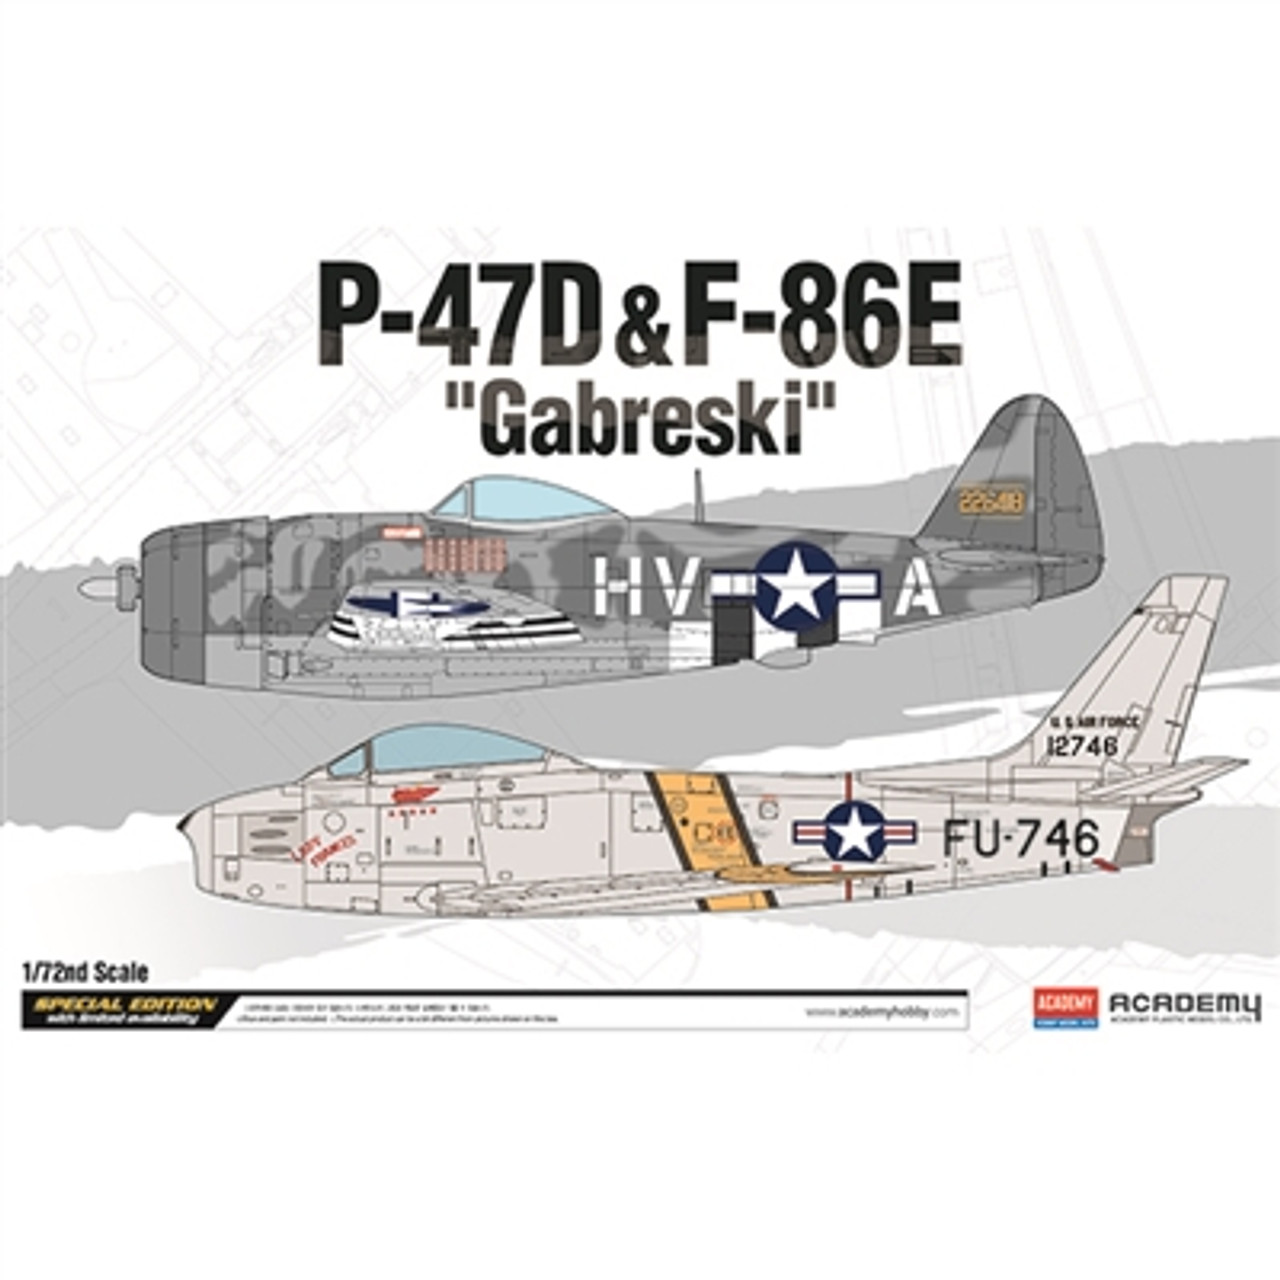 Academy 12530 P-47D & F-84E GABRESKI